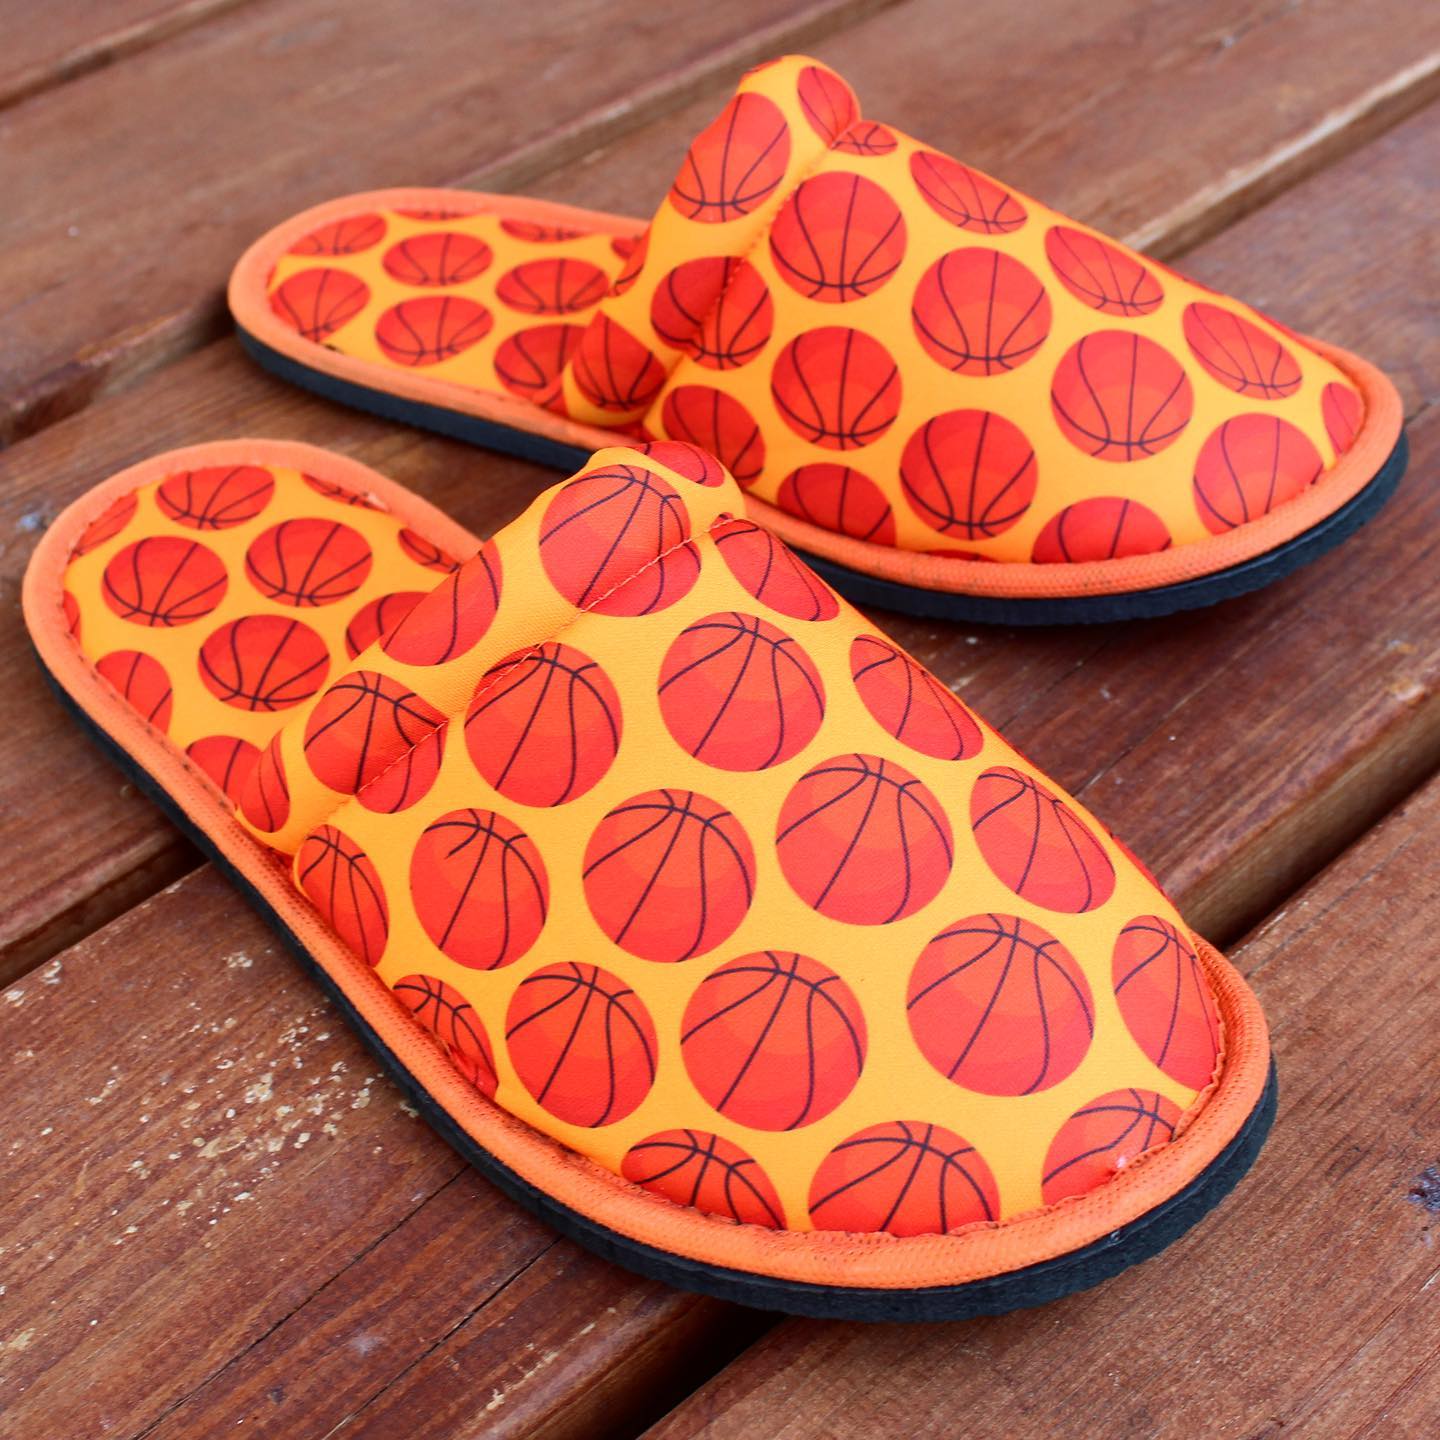 Chochili Men Basketball Home Slippers Red and Orange Lightweight Silent Walk Size 8 to 10 - supplyity